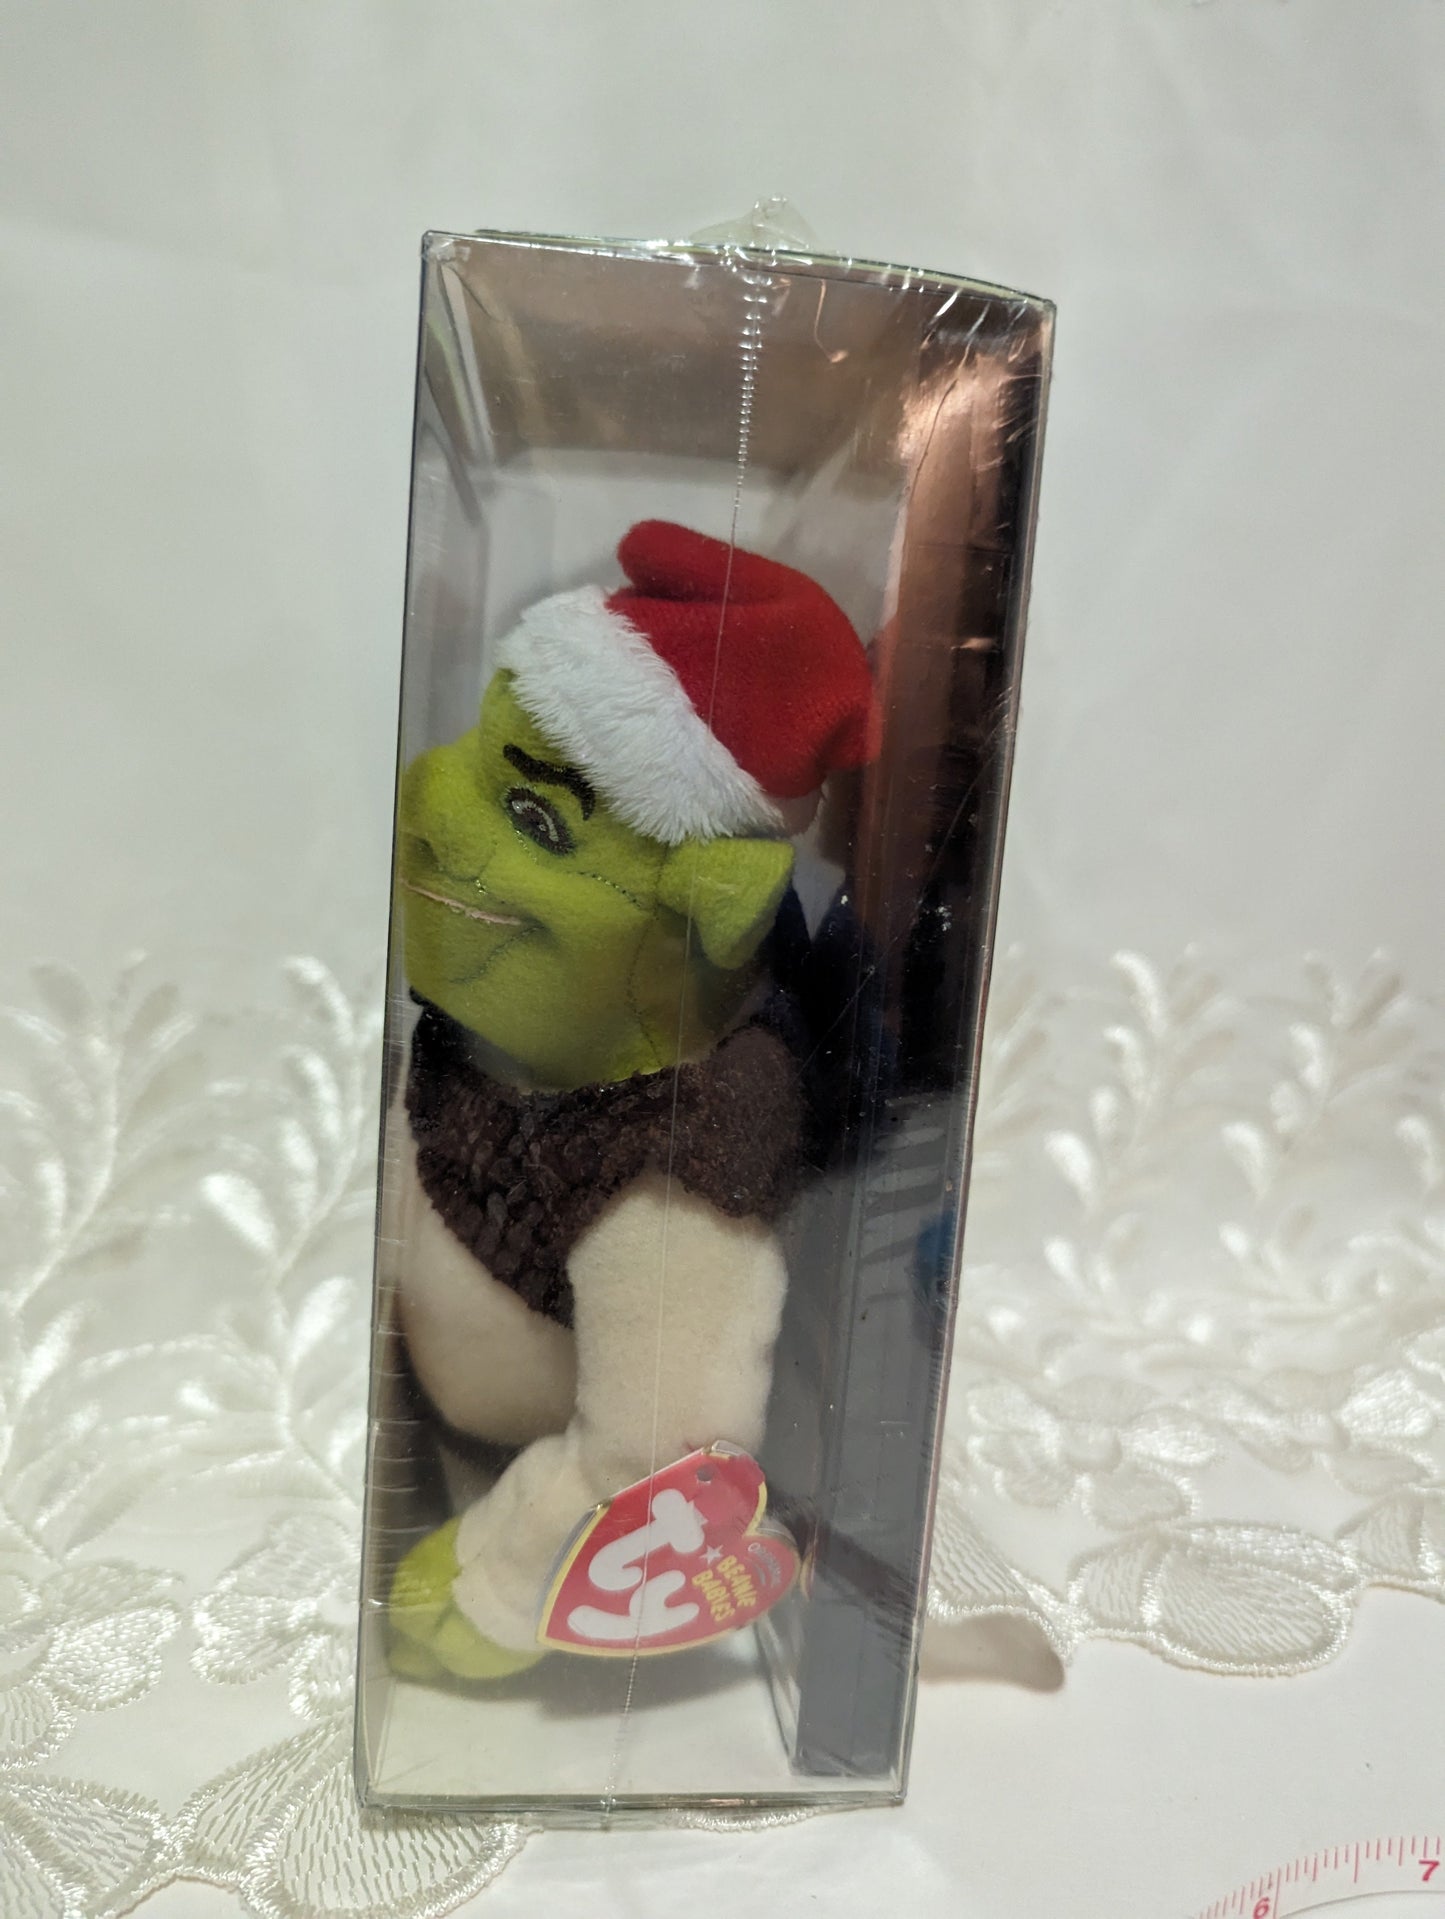 Ty Beanie Baby - Shrek The Ogre + Shrek The Third DVD Set - BNIB *Very Rare* - Vintage Beanies Canada